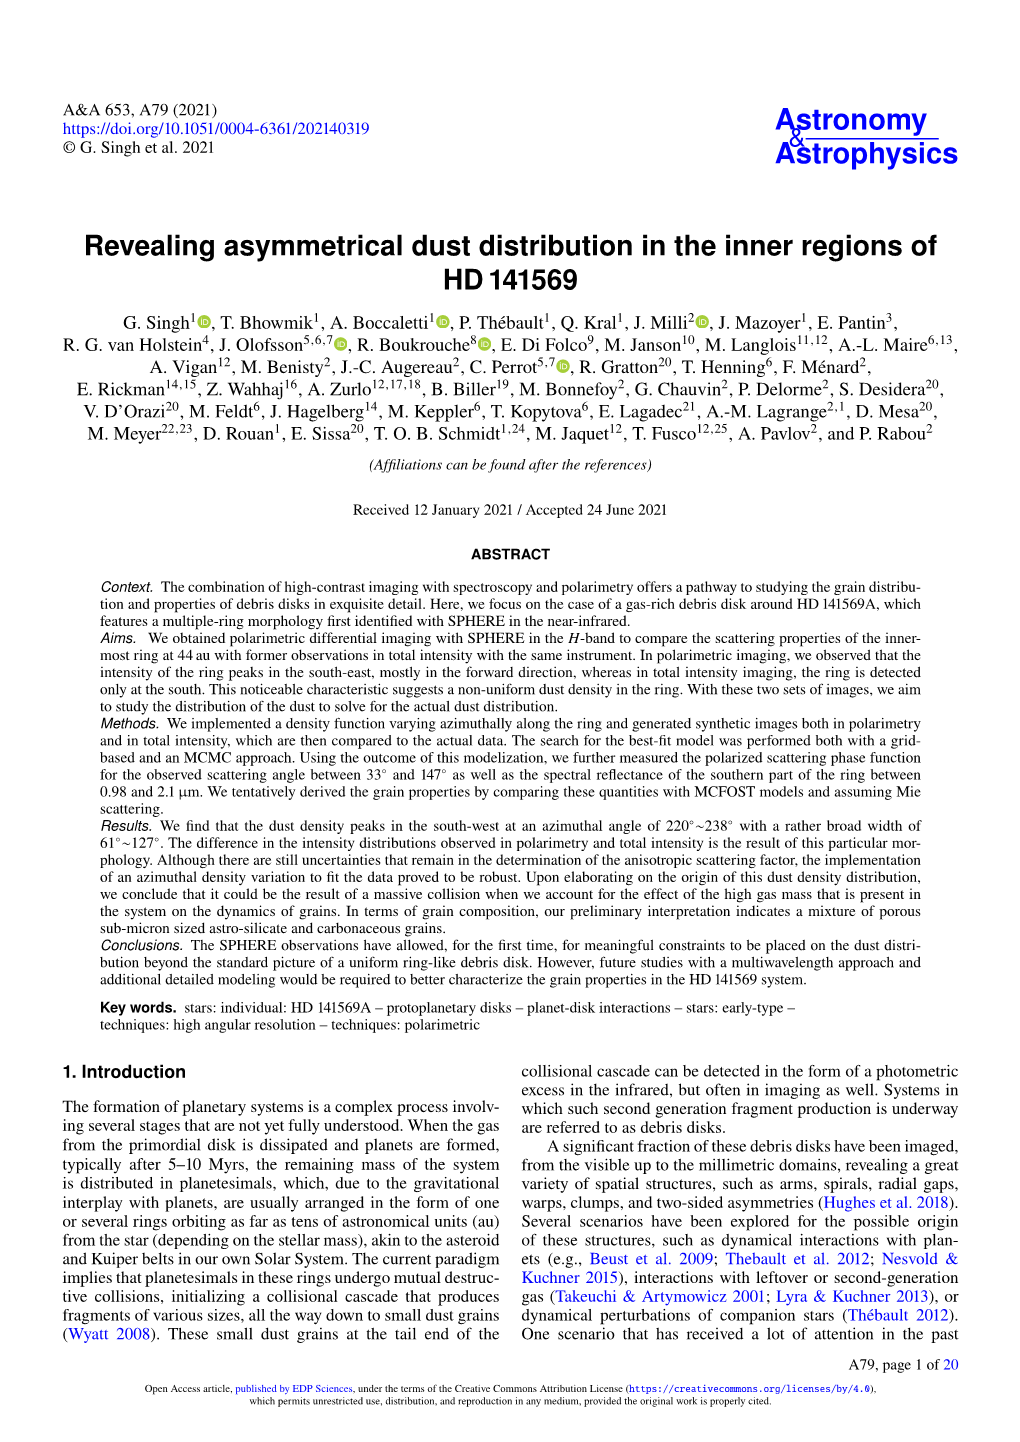 Revealing Asymmetrical Dust Distribution in the Inner Regions of HD 141569 G